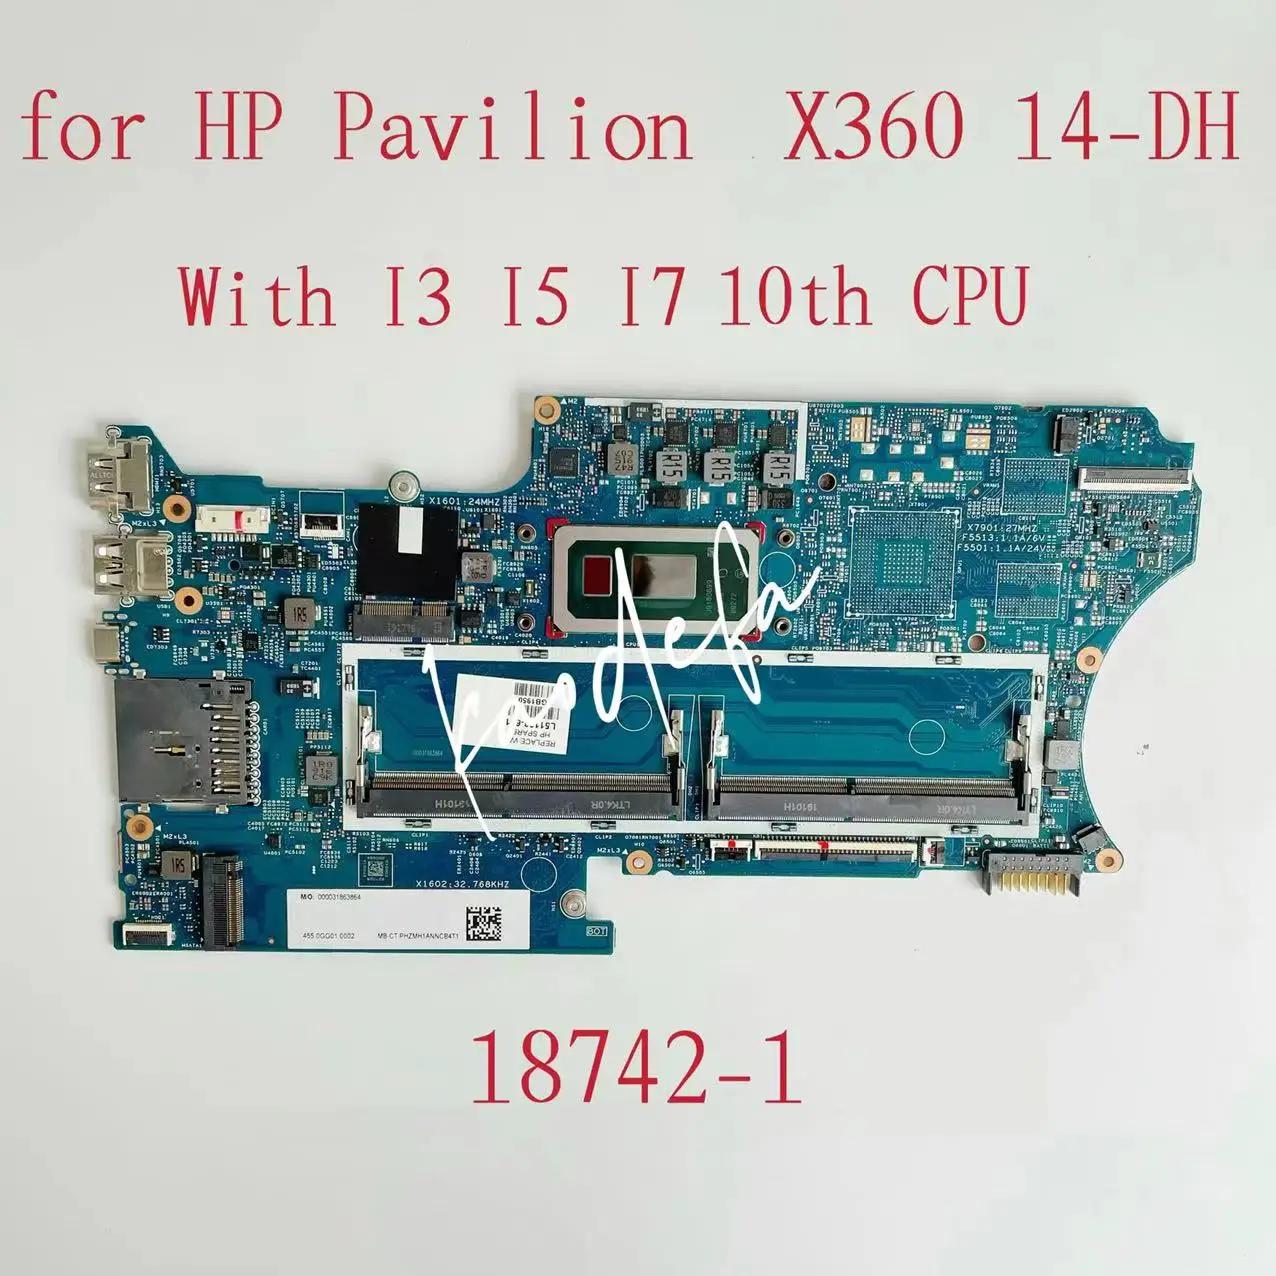 HP PAVILION X360 14-DH Ʈ , 18742-1, i3 i5 i7 10 ° CPU, DDR4 L67766-601 L67767-601 L67768-601